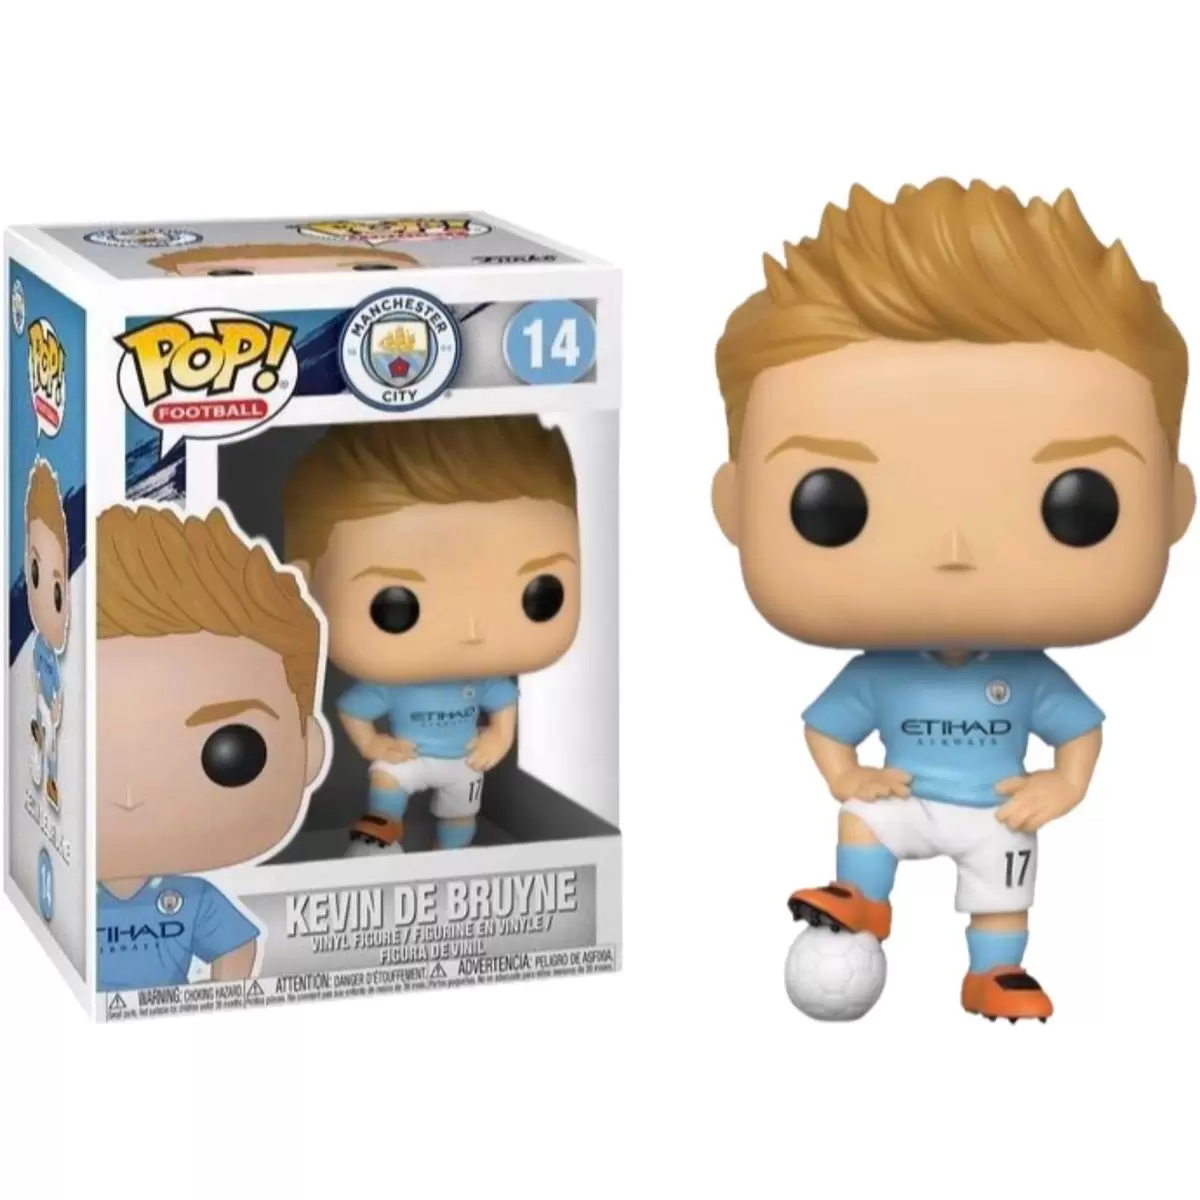 Manchester City - Kevin de Bruyne - POP! Football (Soccer) action figure 14